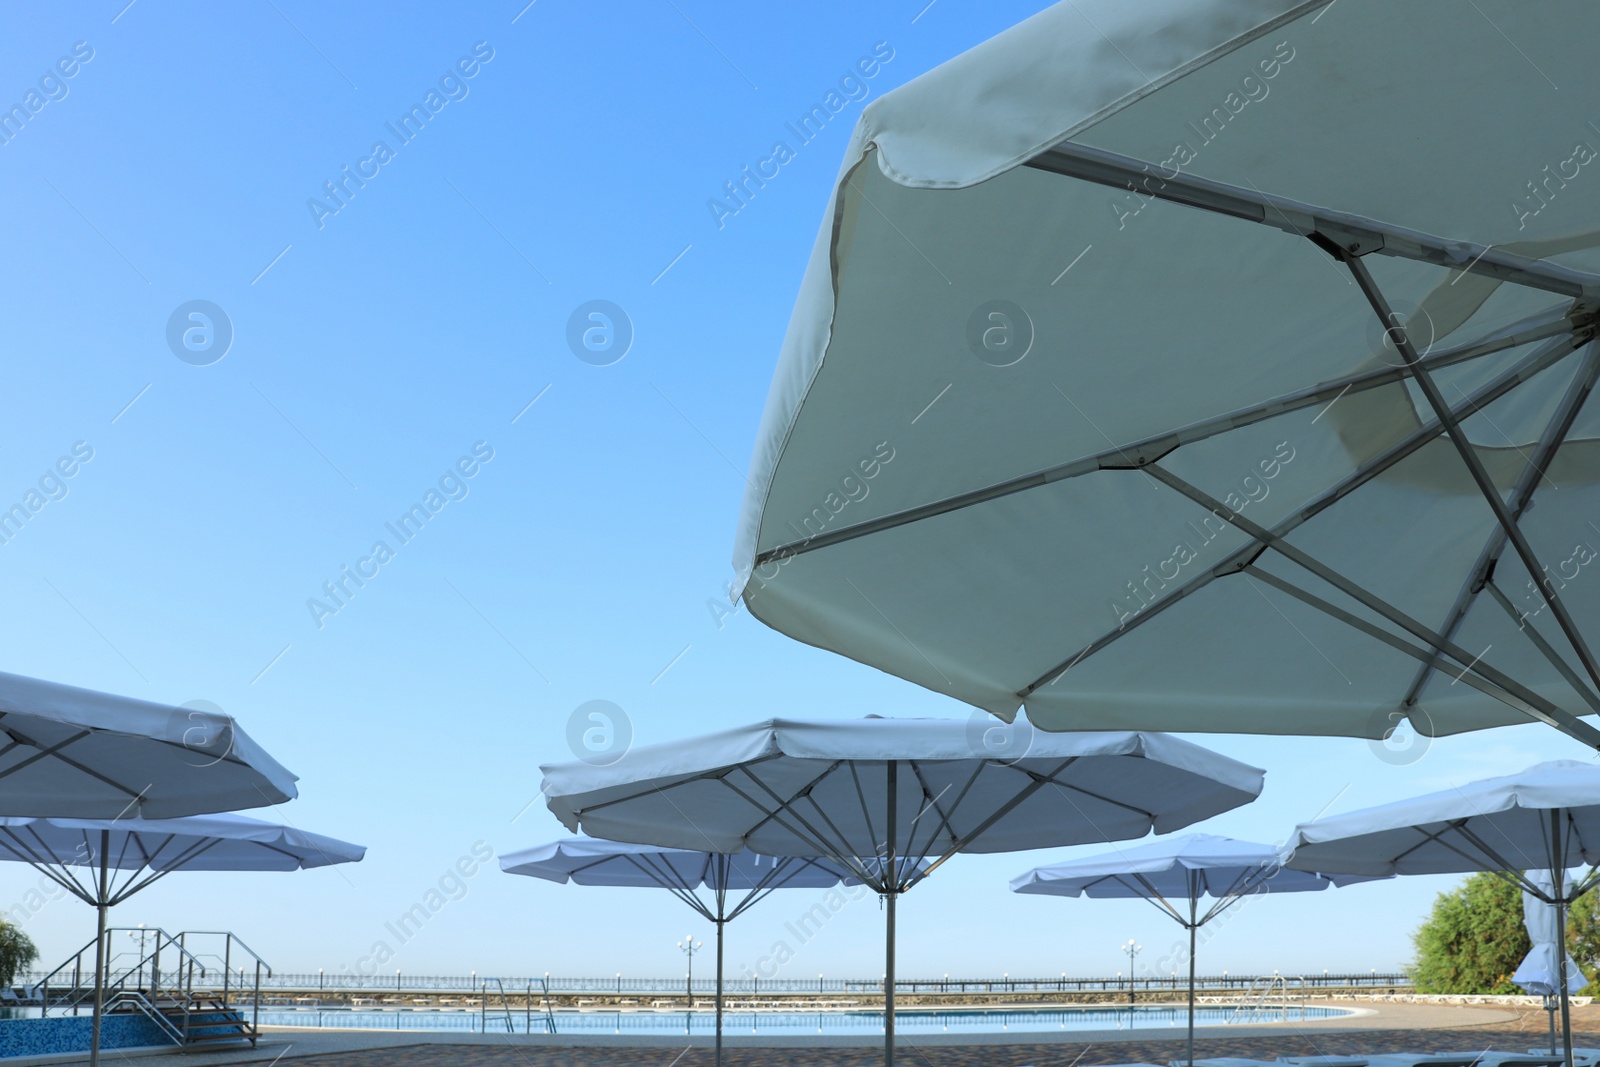 Photo of Beach umbrellas near outdoor swimming pool at resort